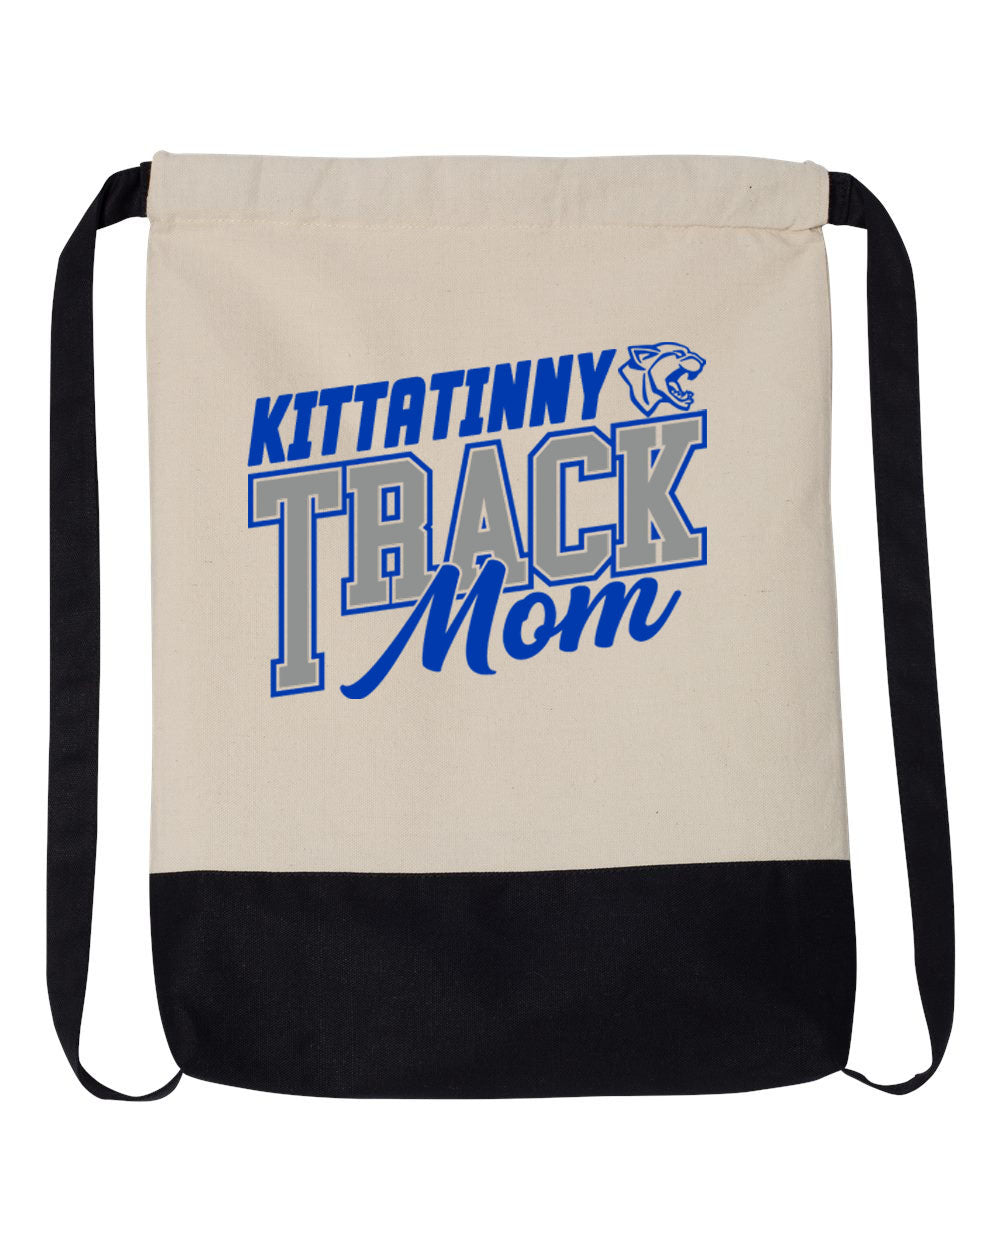 Kittatinny Track design 4 Drawstring Bag